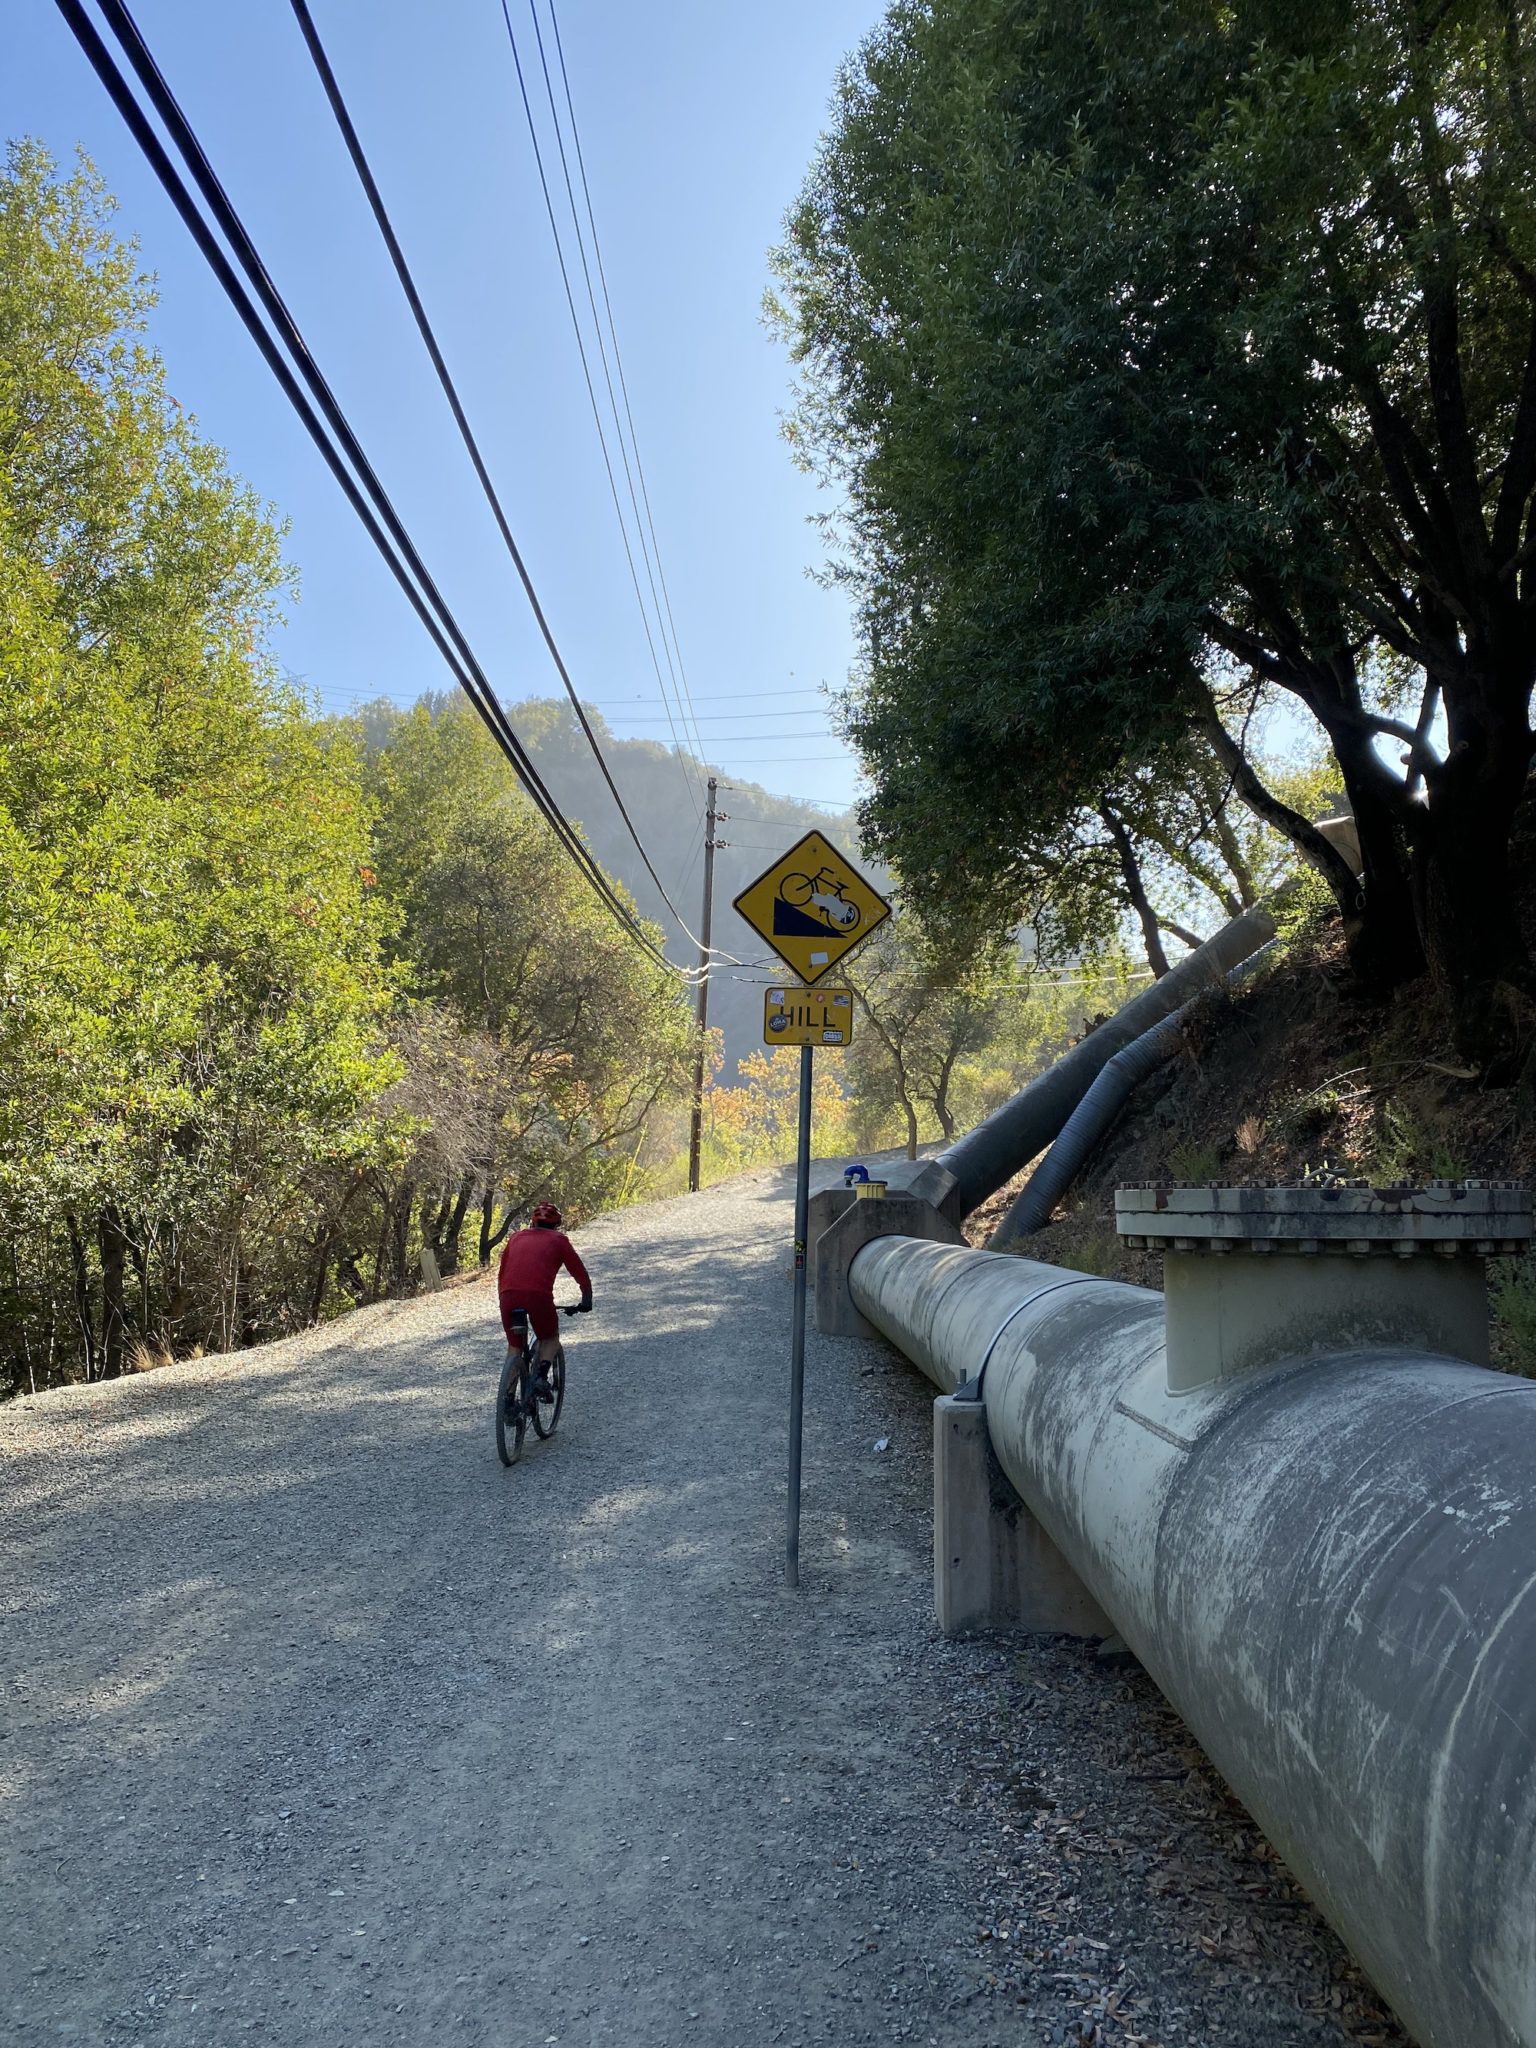 A man riding a bike next to a "hill" warning sign. 